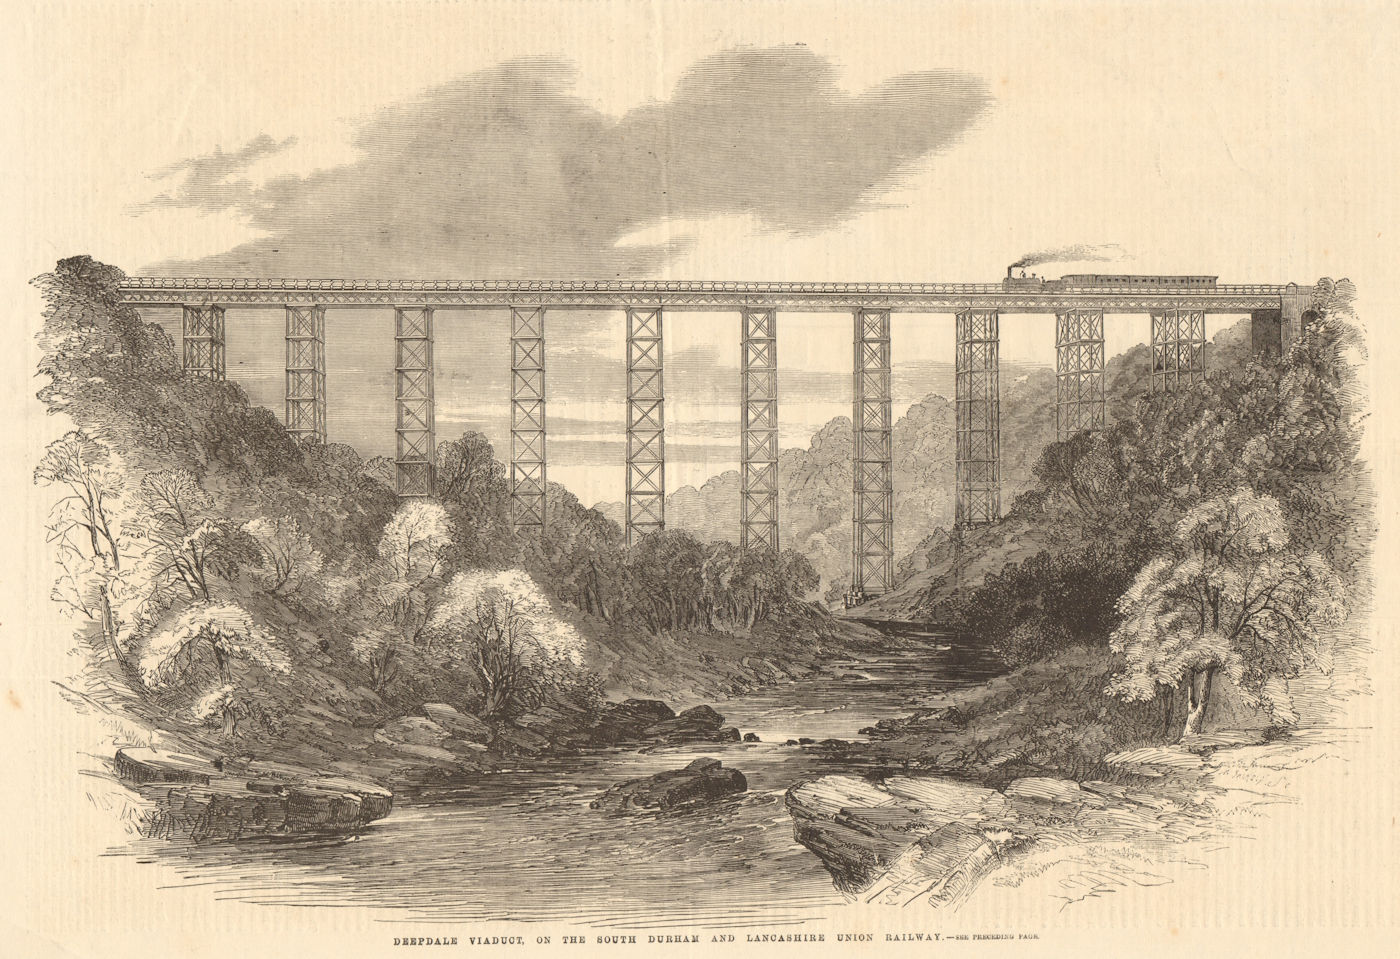 Deepdale Viaduct, on the South Durham & Lancashire Union Railway. Preston 1859